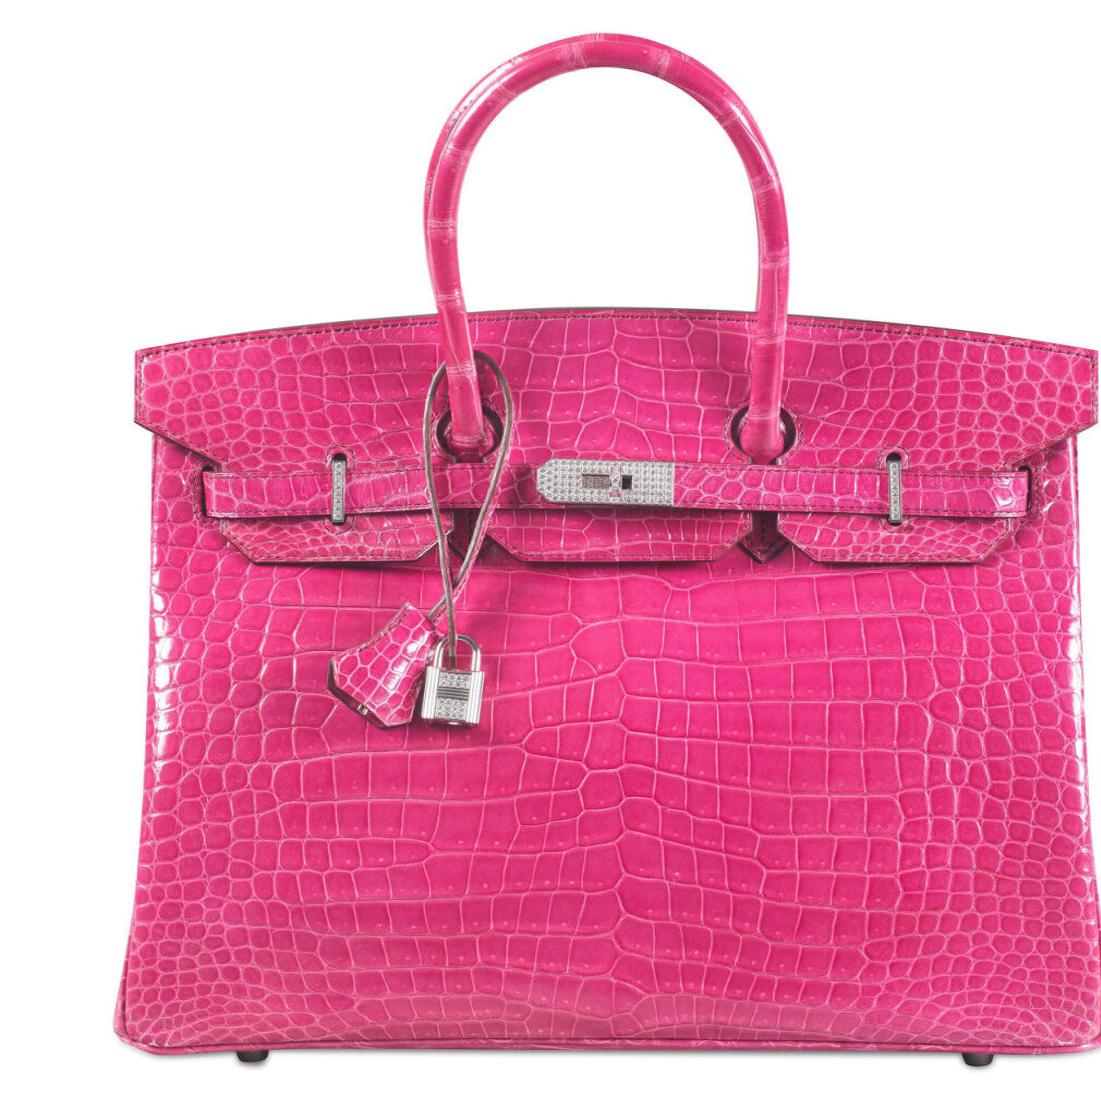 Jane Birkin Wants Hermès To Take Her Name Off The Birkin Bag — Fashion, Law  & Business